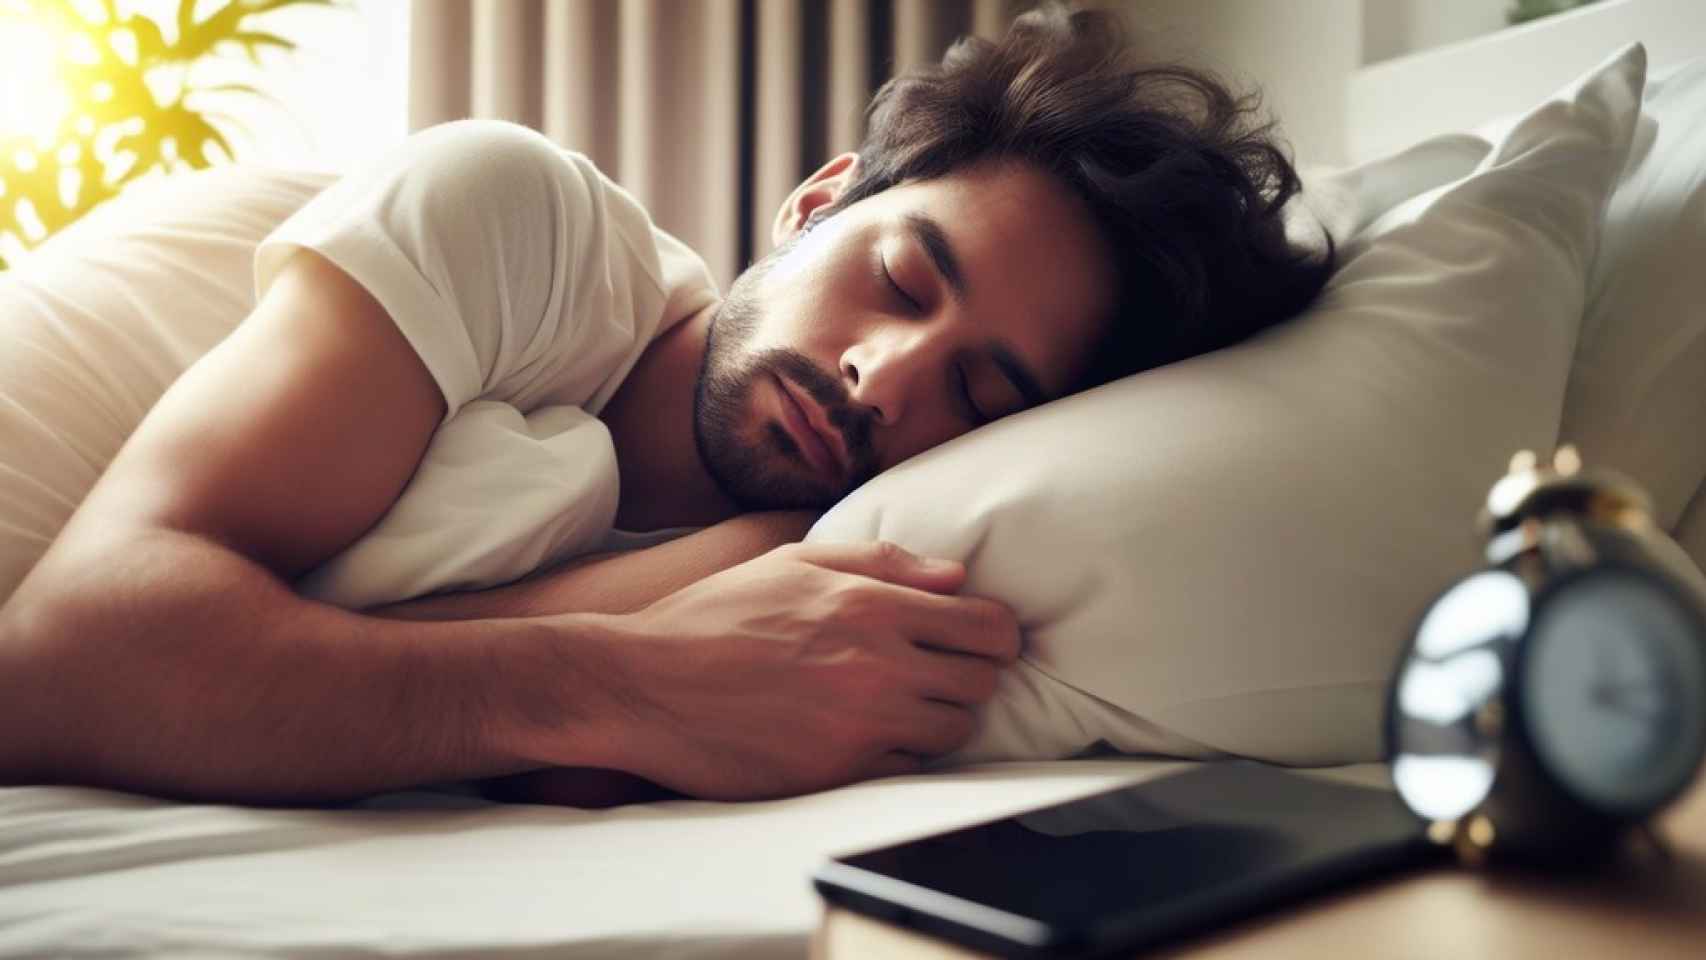 Persona durmiendo junto a su smartphone